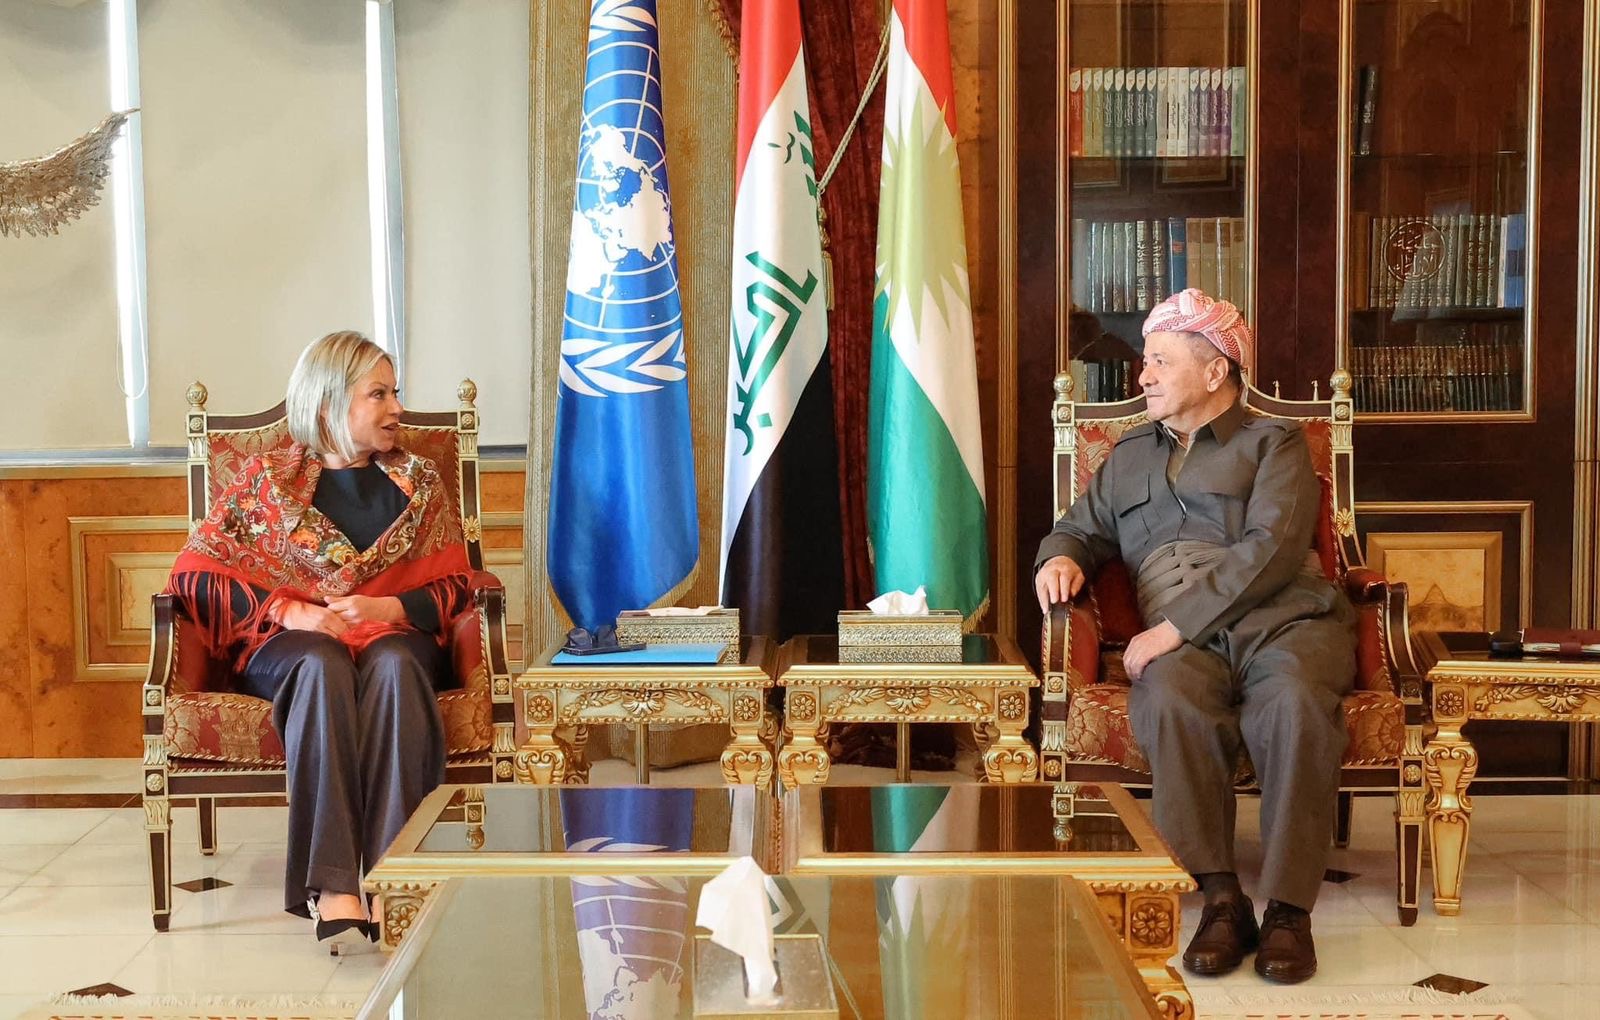 Kurdish leader Barzani says some Iraqi parties are violating agreements